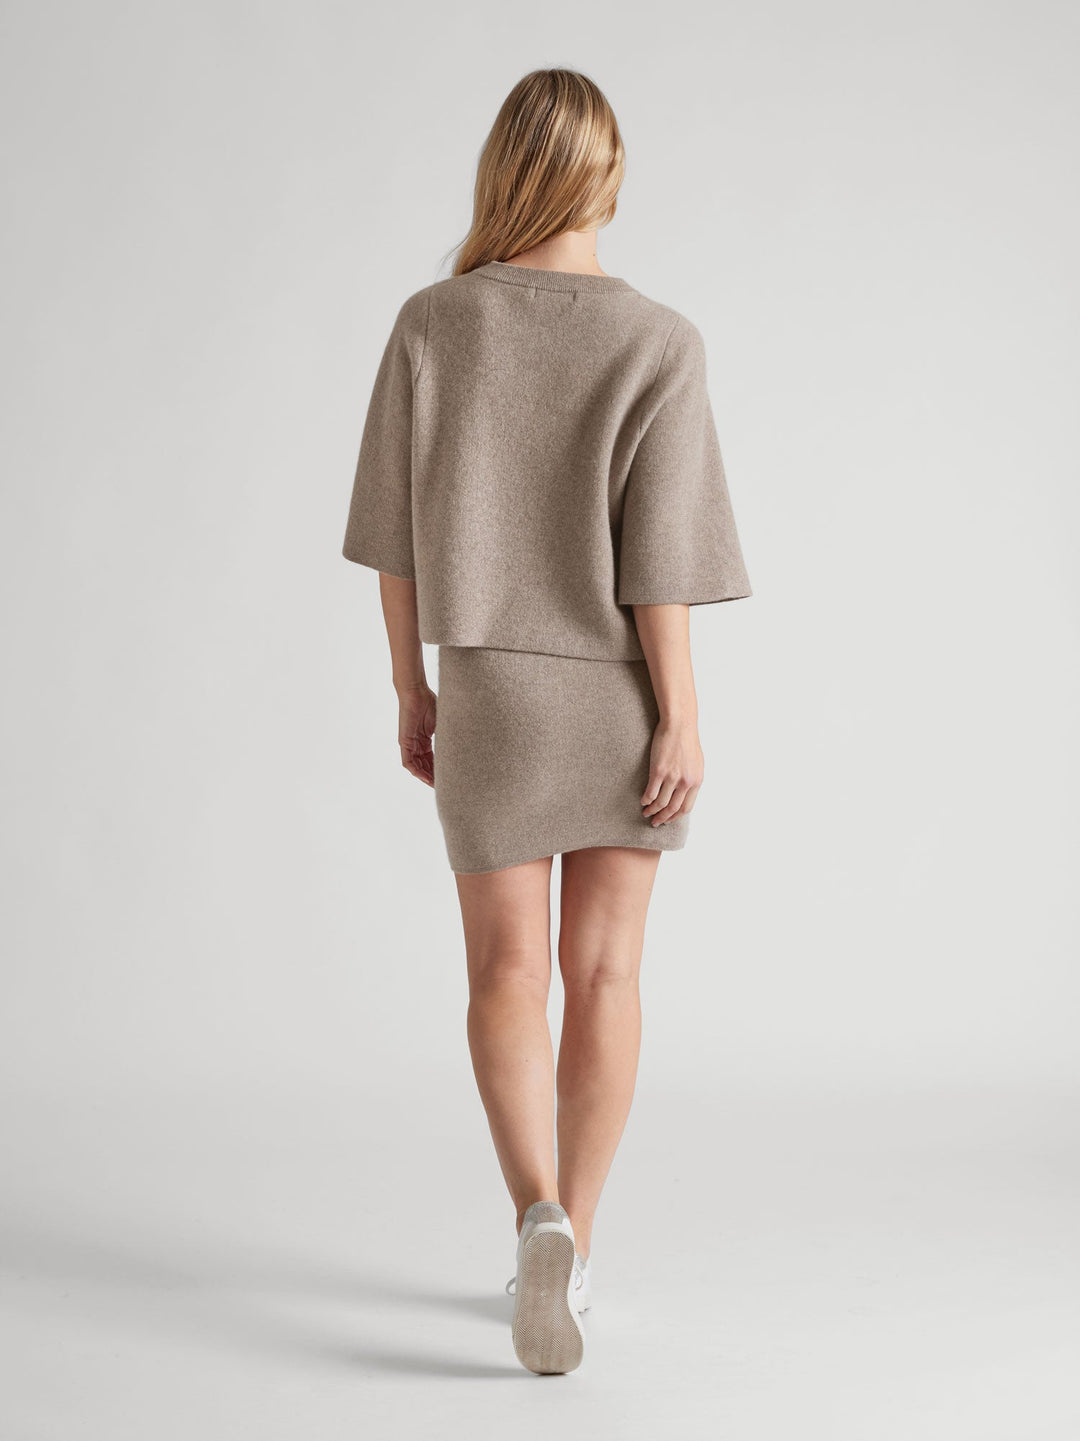 Cashmere skirt "Olava" in 100% pure cashmere. Scandinavian design by Kashmina. Color: Toast.